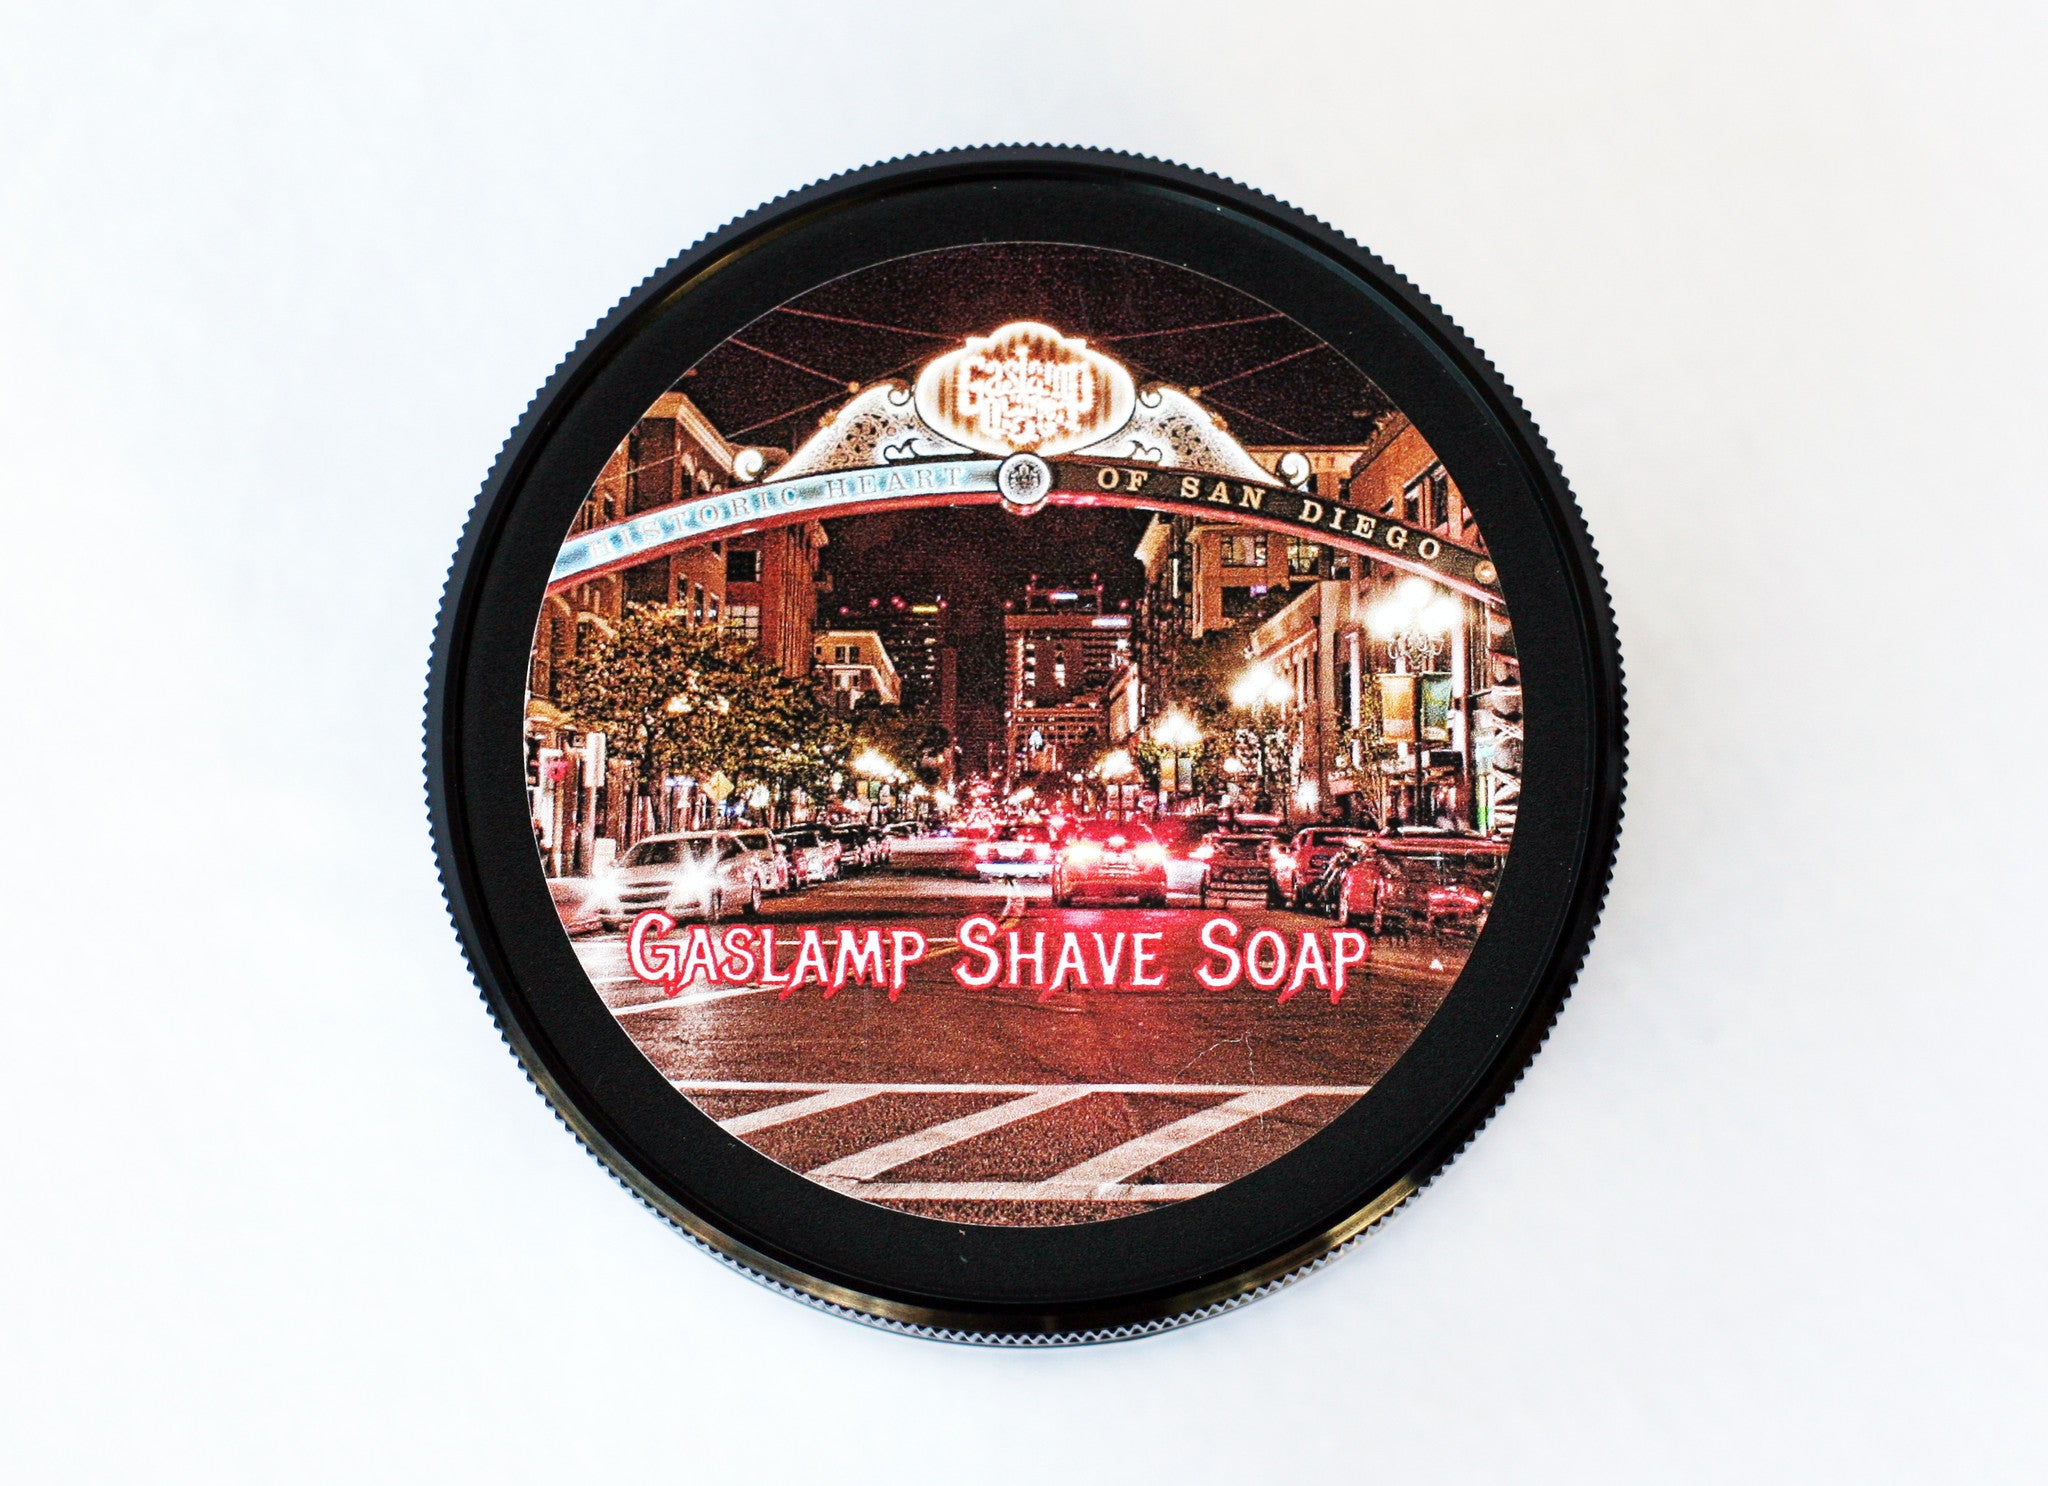 Gaslamp Vegan Shave Soap label art on a plastic lid - CreationsByWill